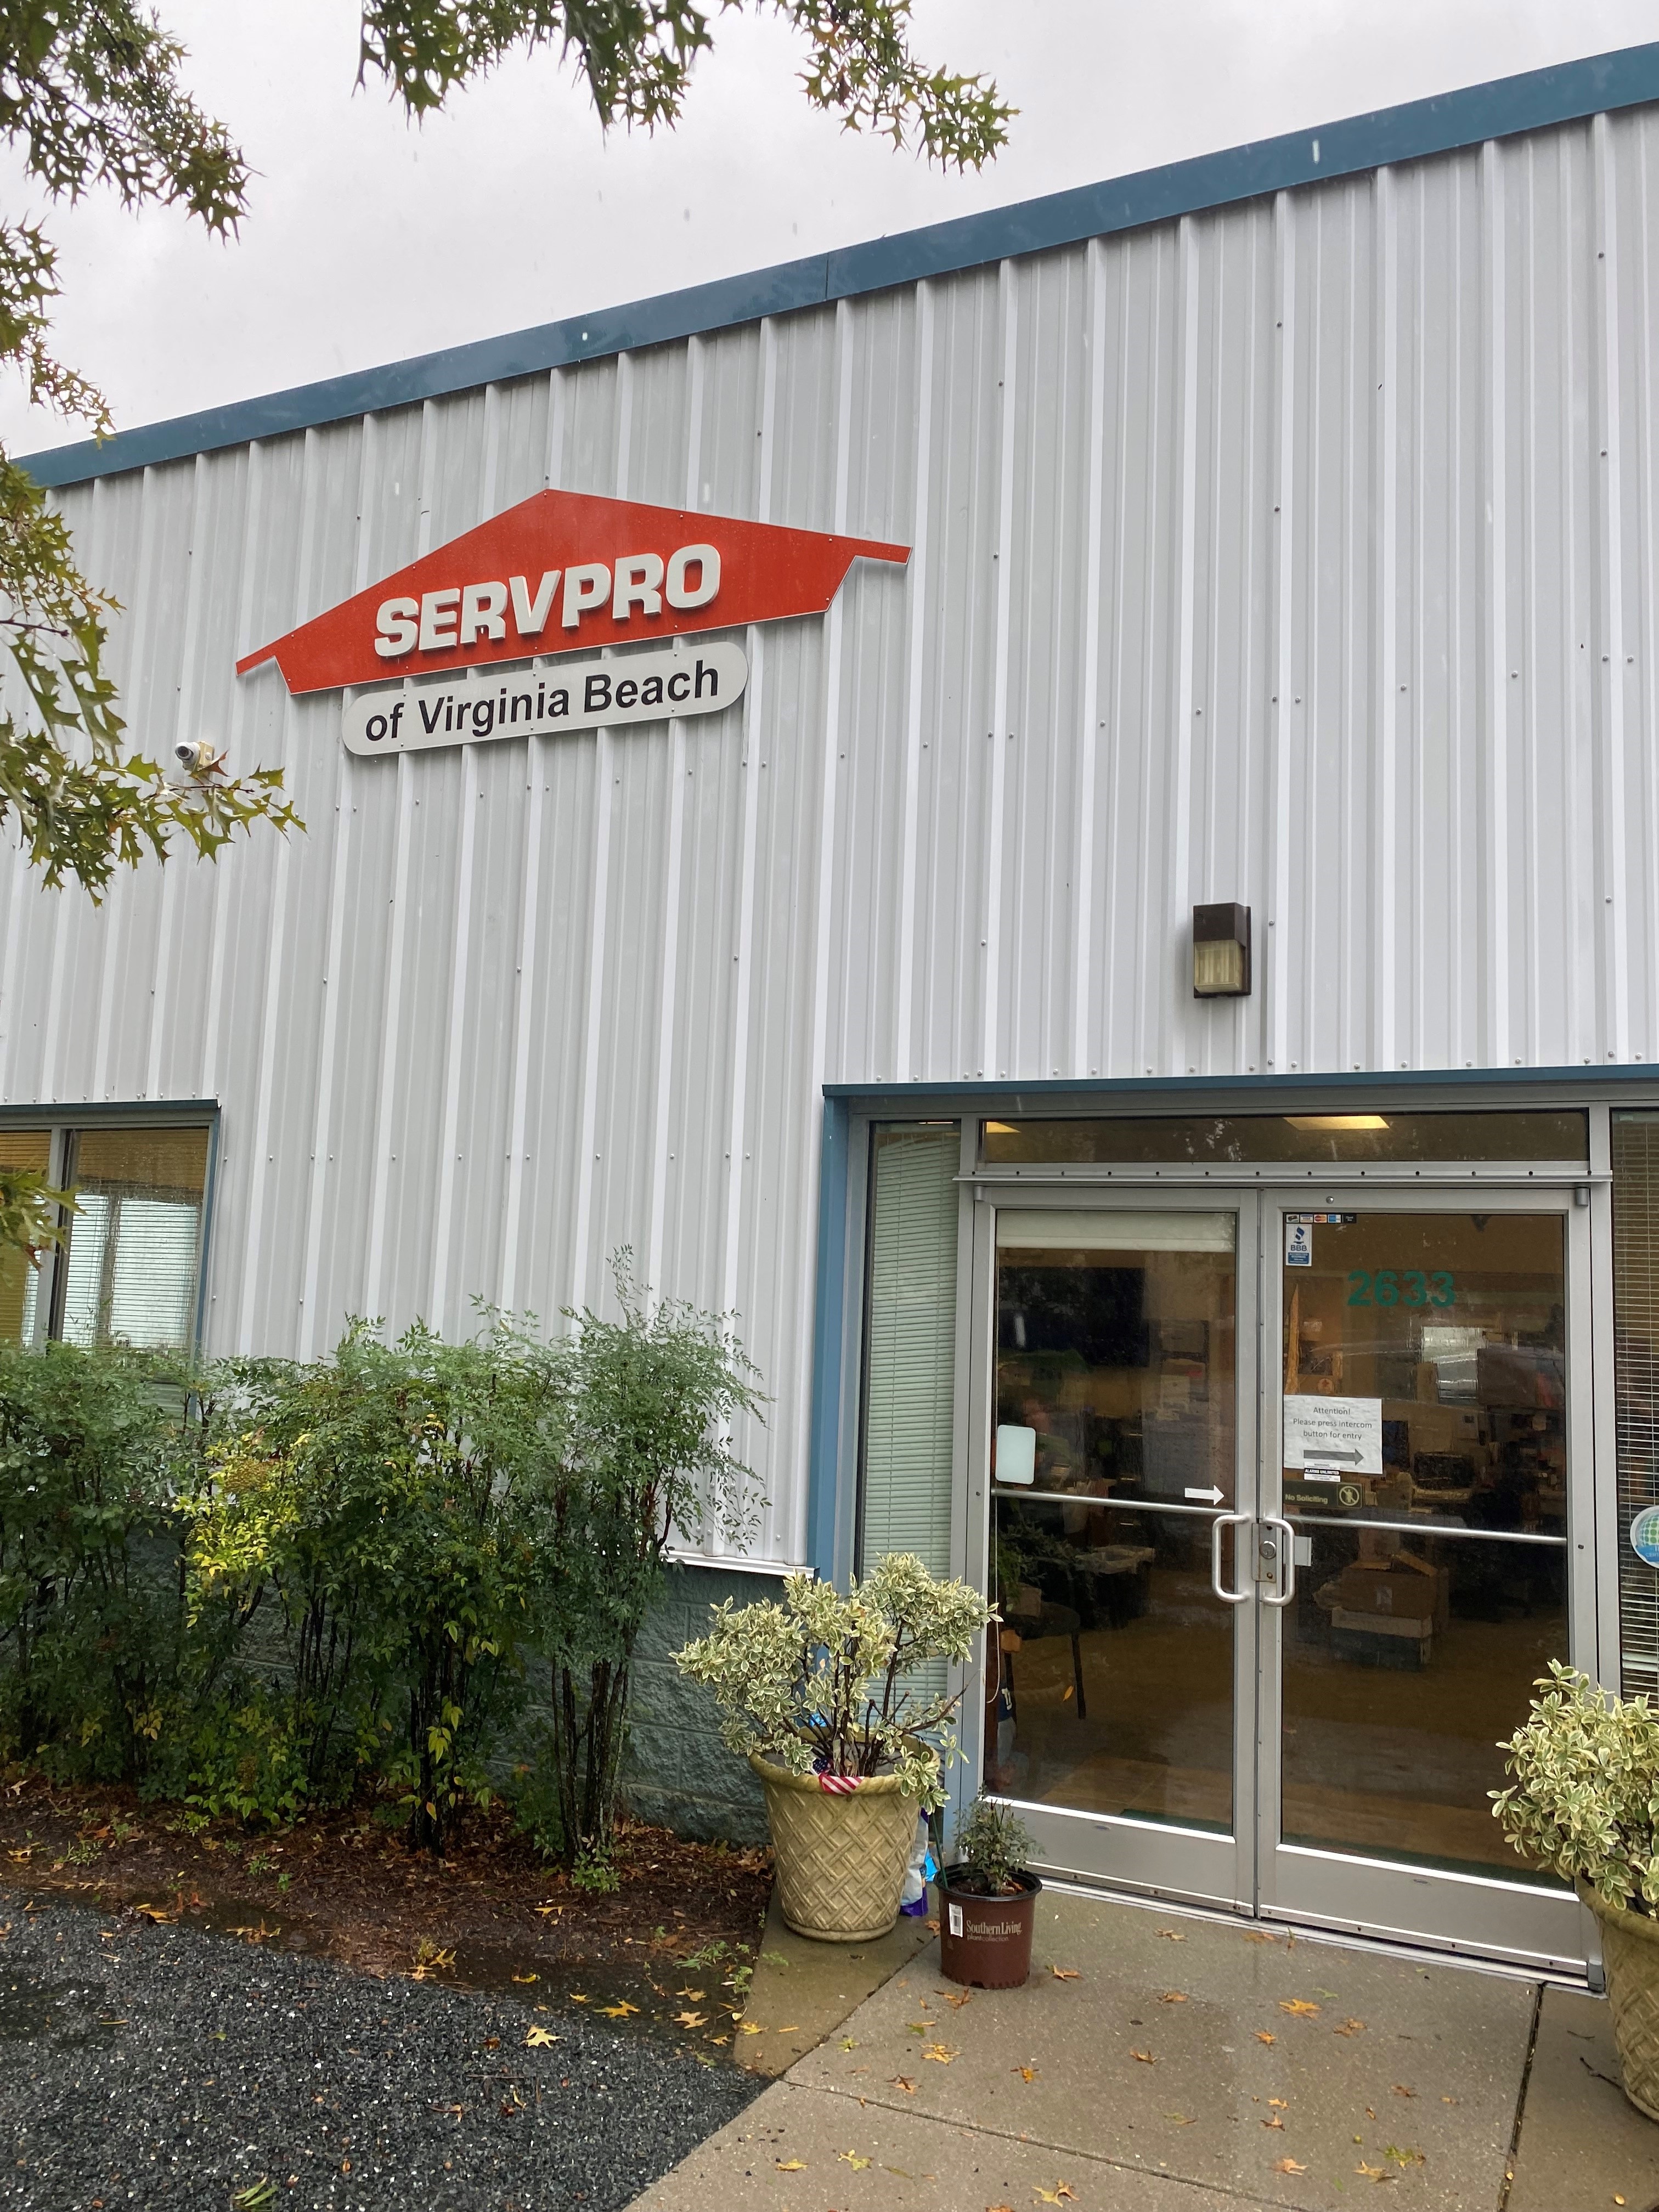 SERVPRO front door and building sign